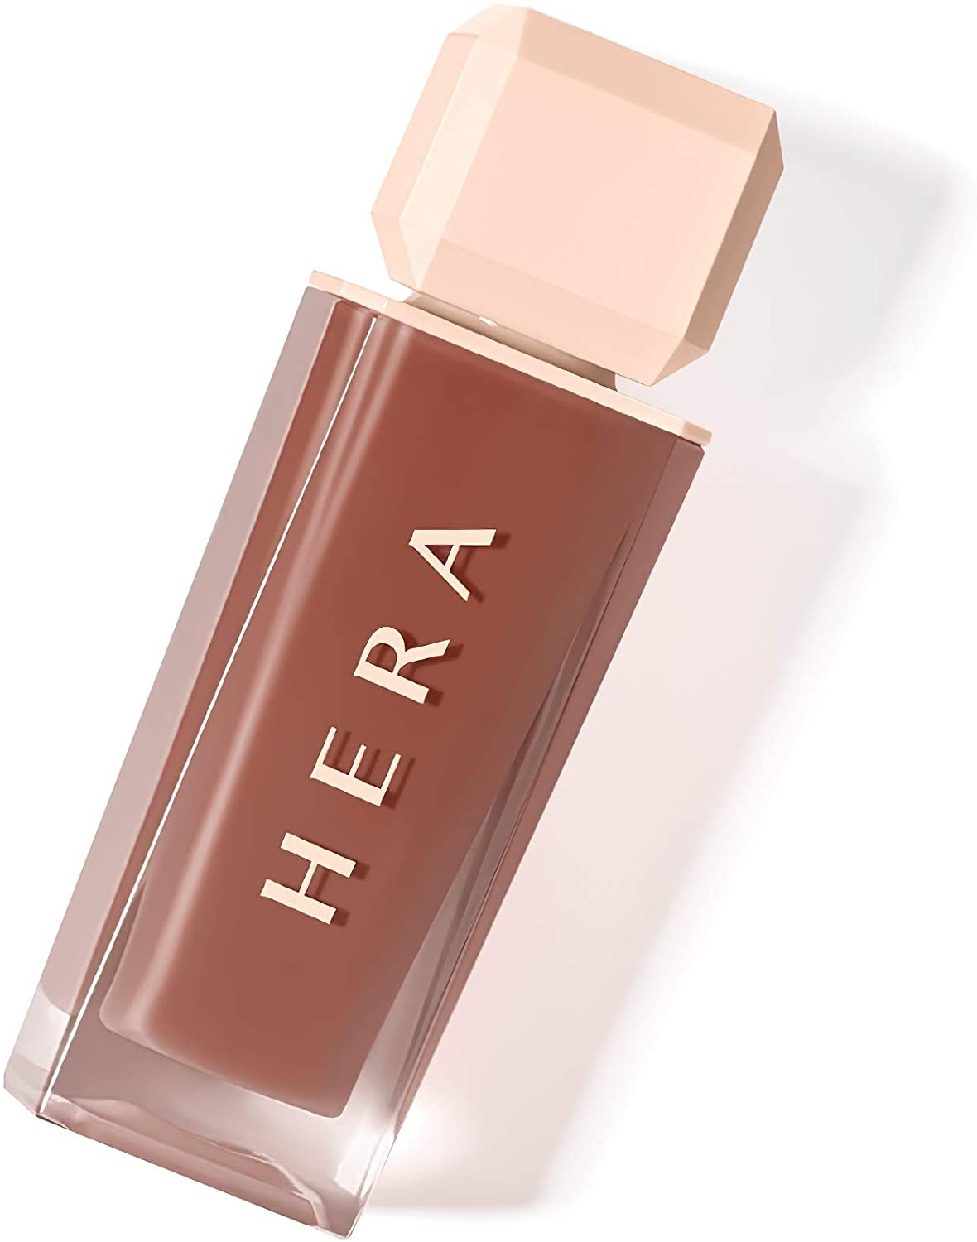 HERA(ヘラ) センシュアルヌードグロスの商品画像1 